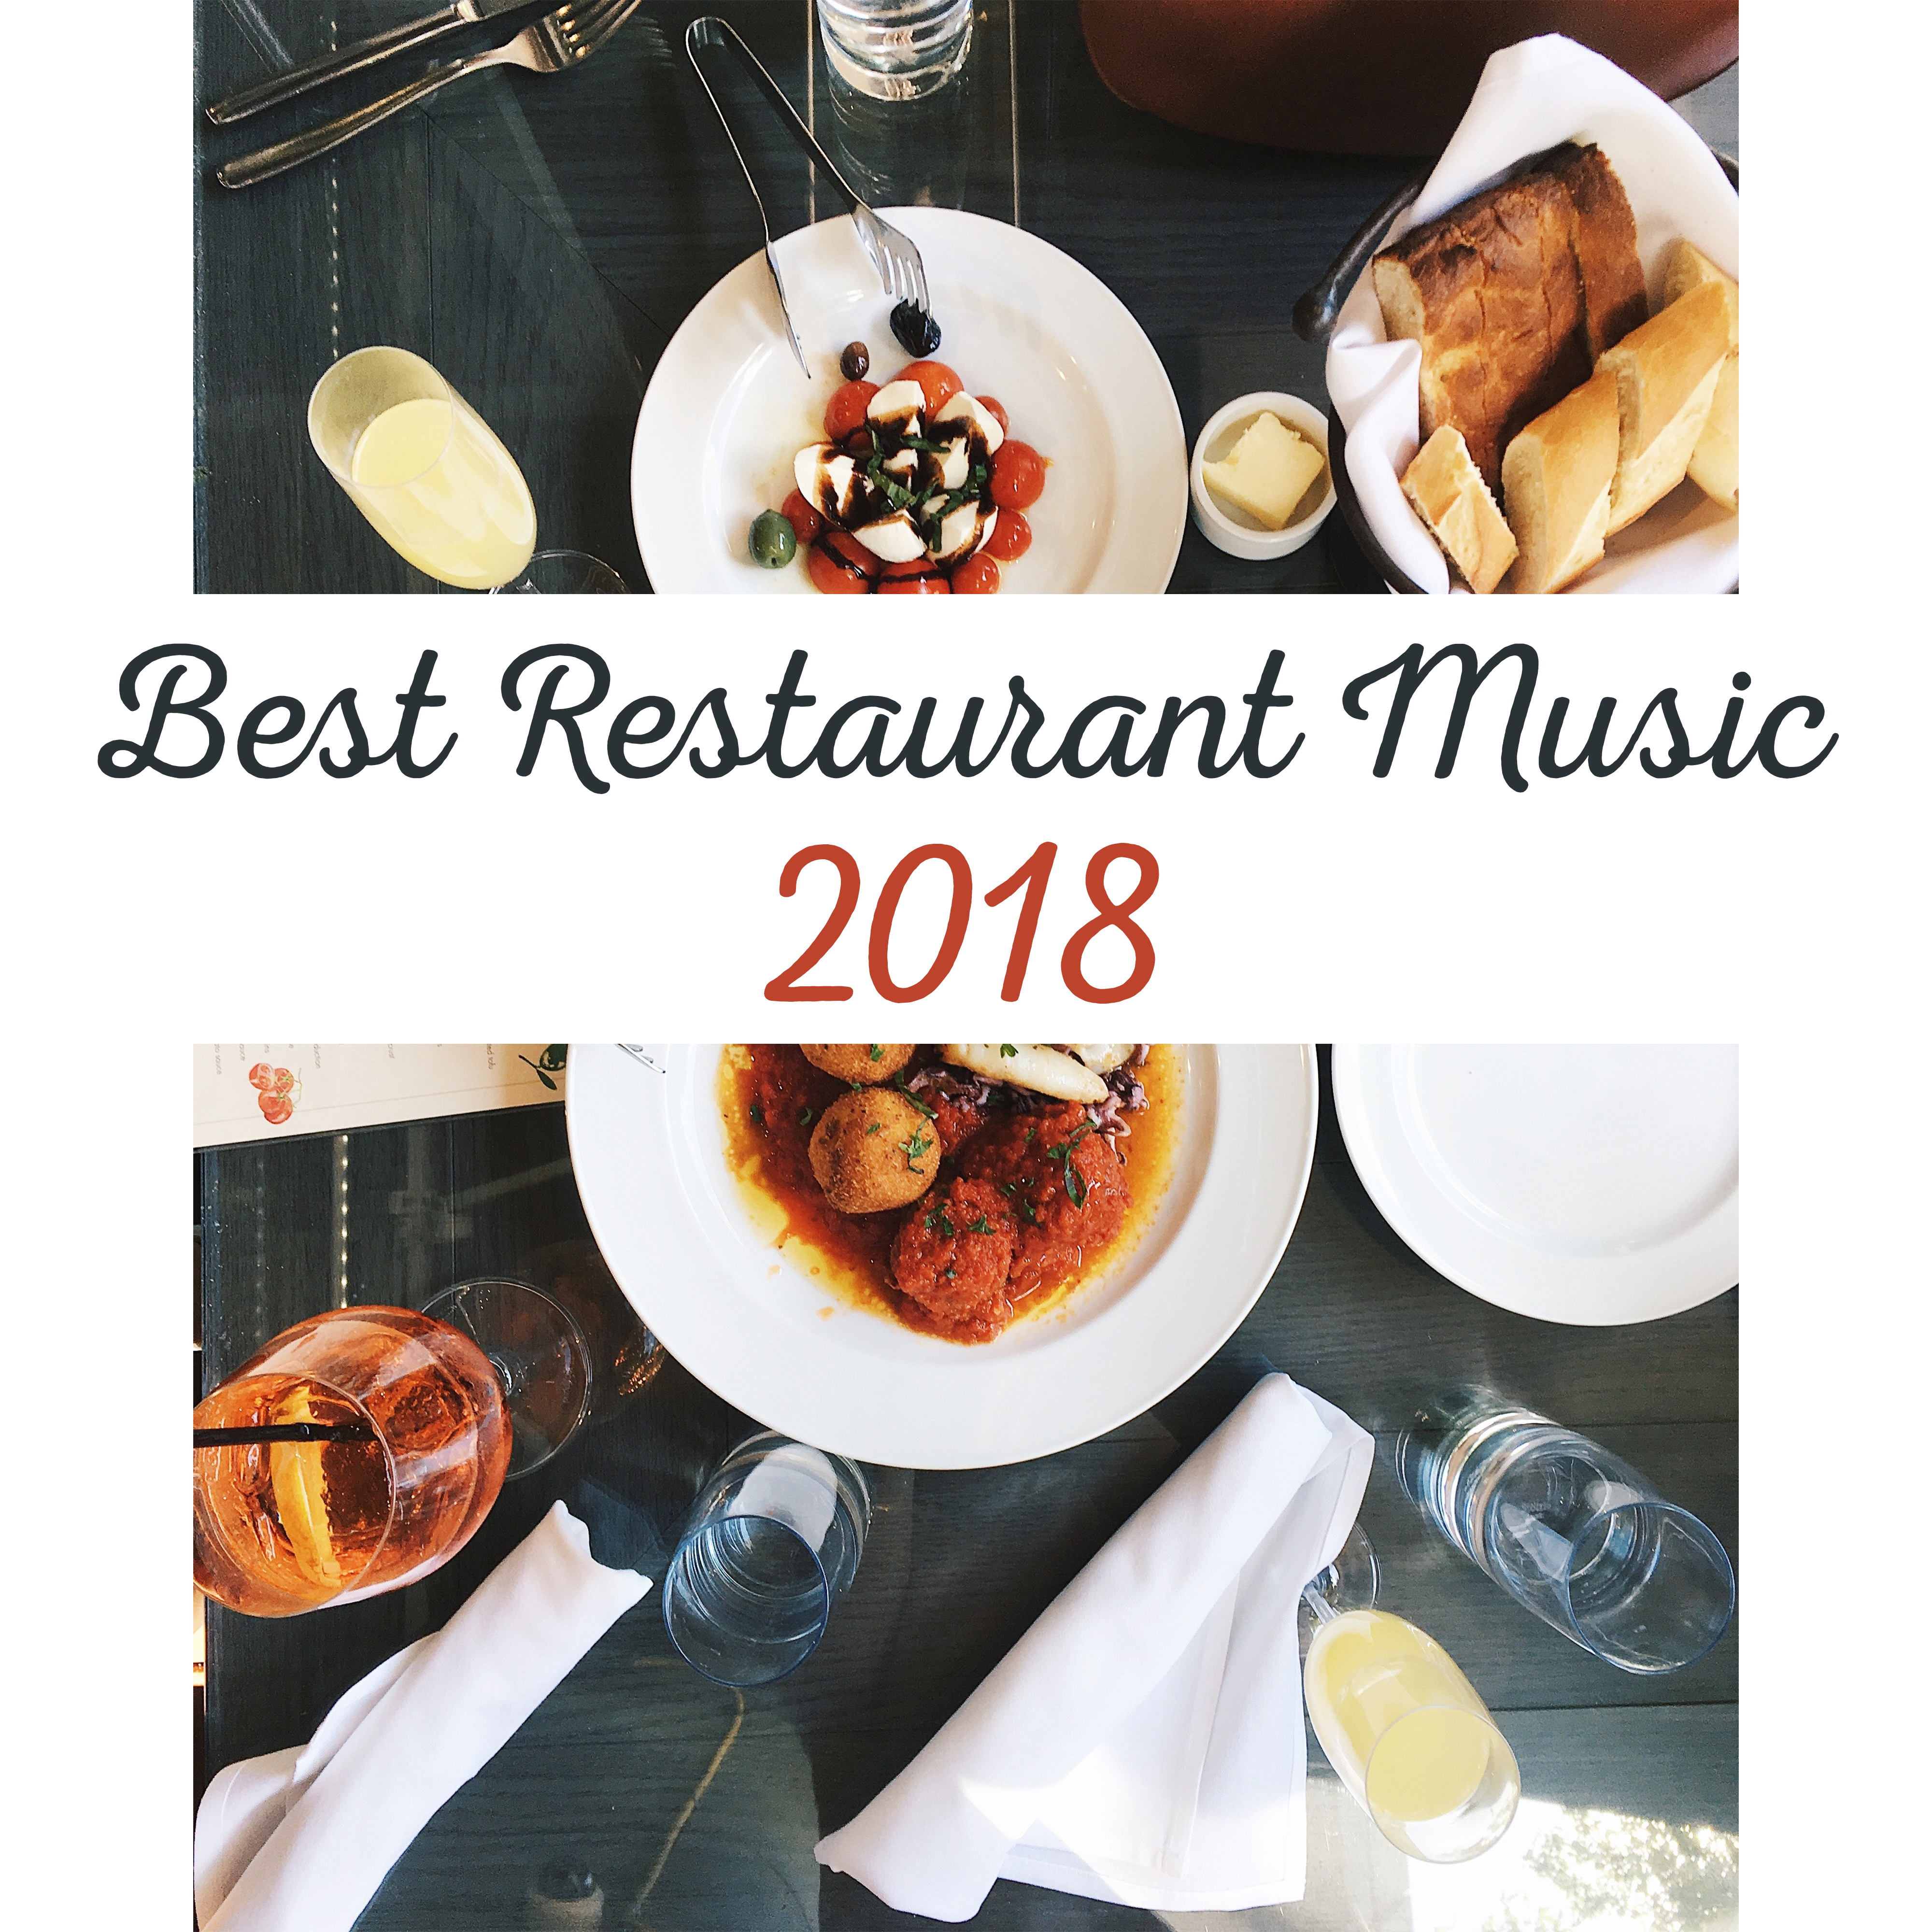 Best Restaurant Music 2018